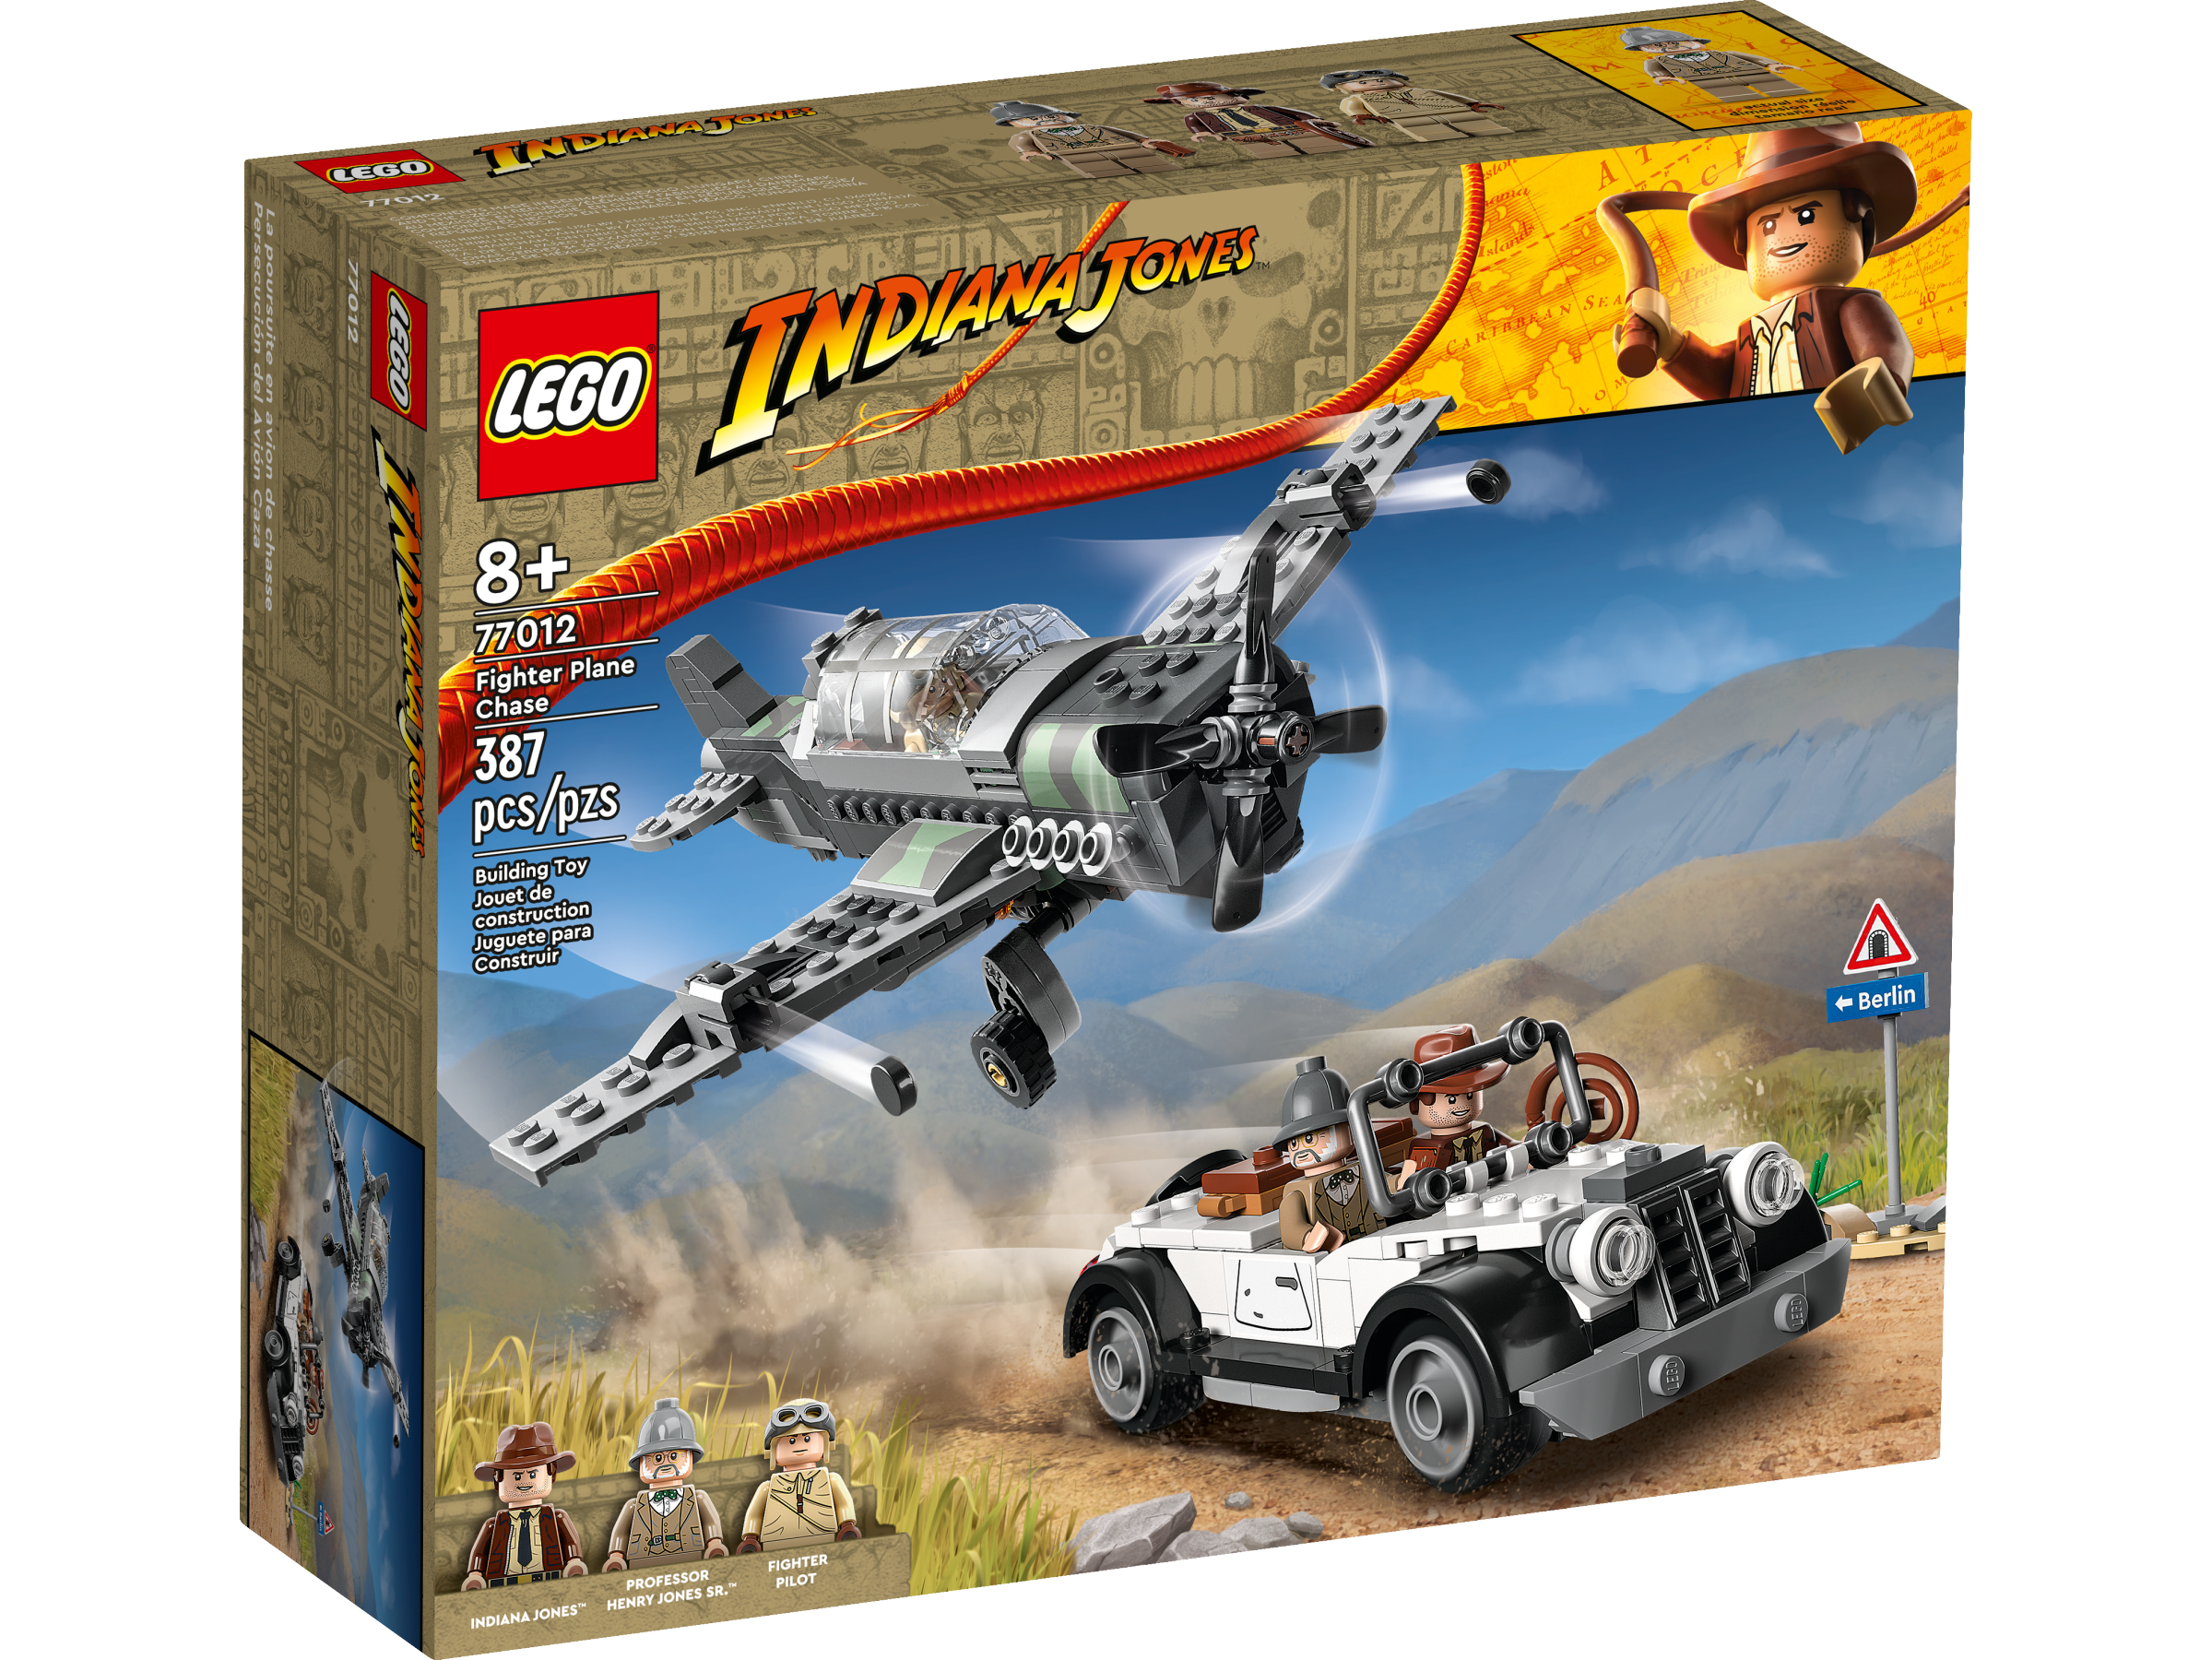 Fighter Plane Chase (LEGO), Indiana Jones Wiki